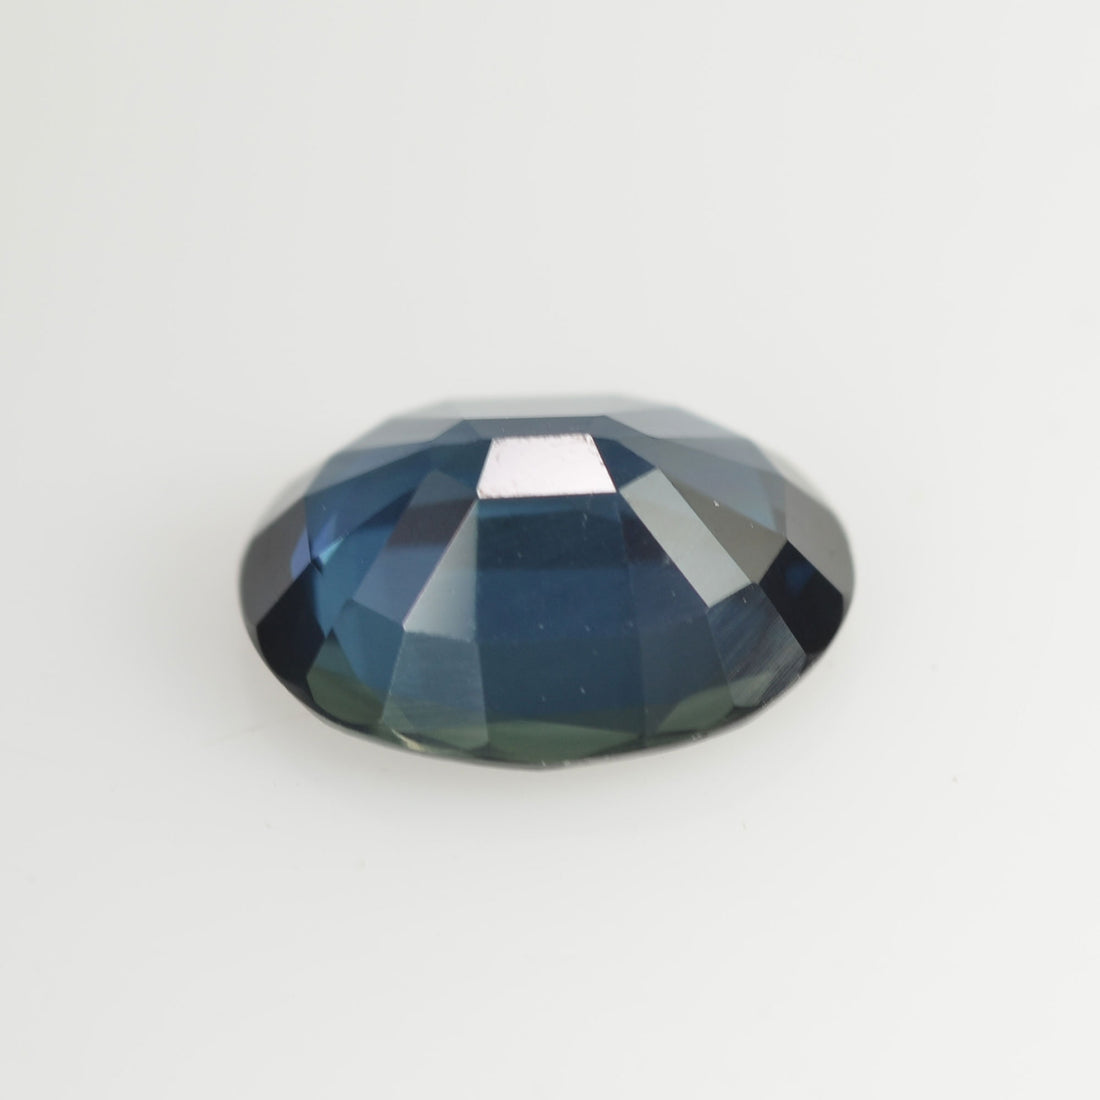 1.17 Cts Natural Blue Sapphire Loose Gemstone Oval Cut - Thai Gems Export Ltd.